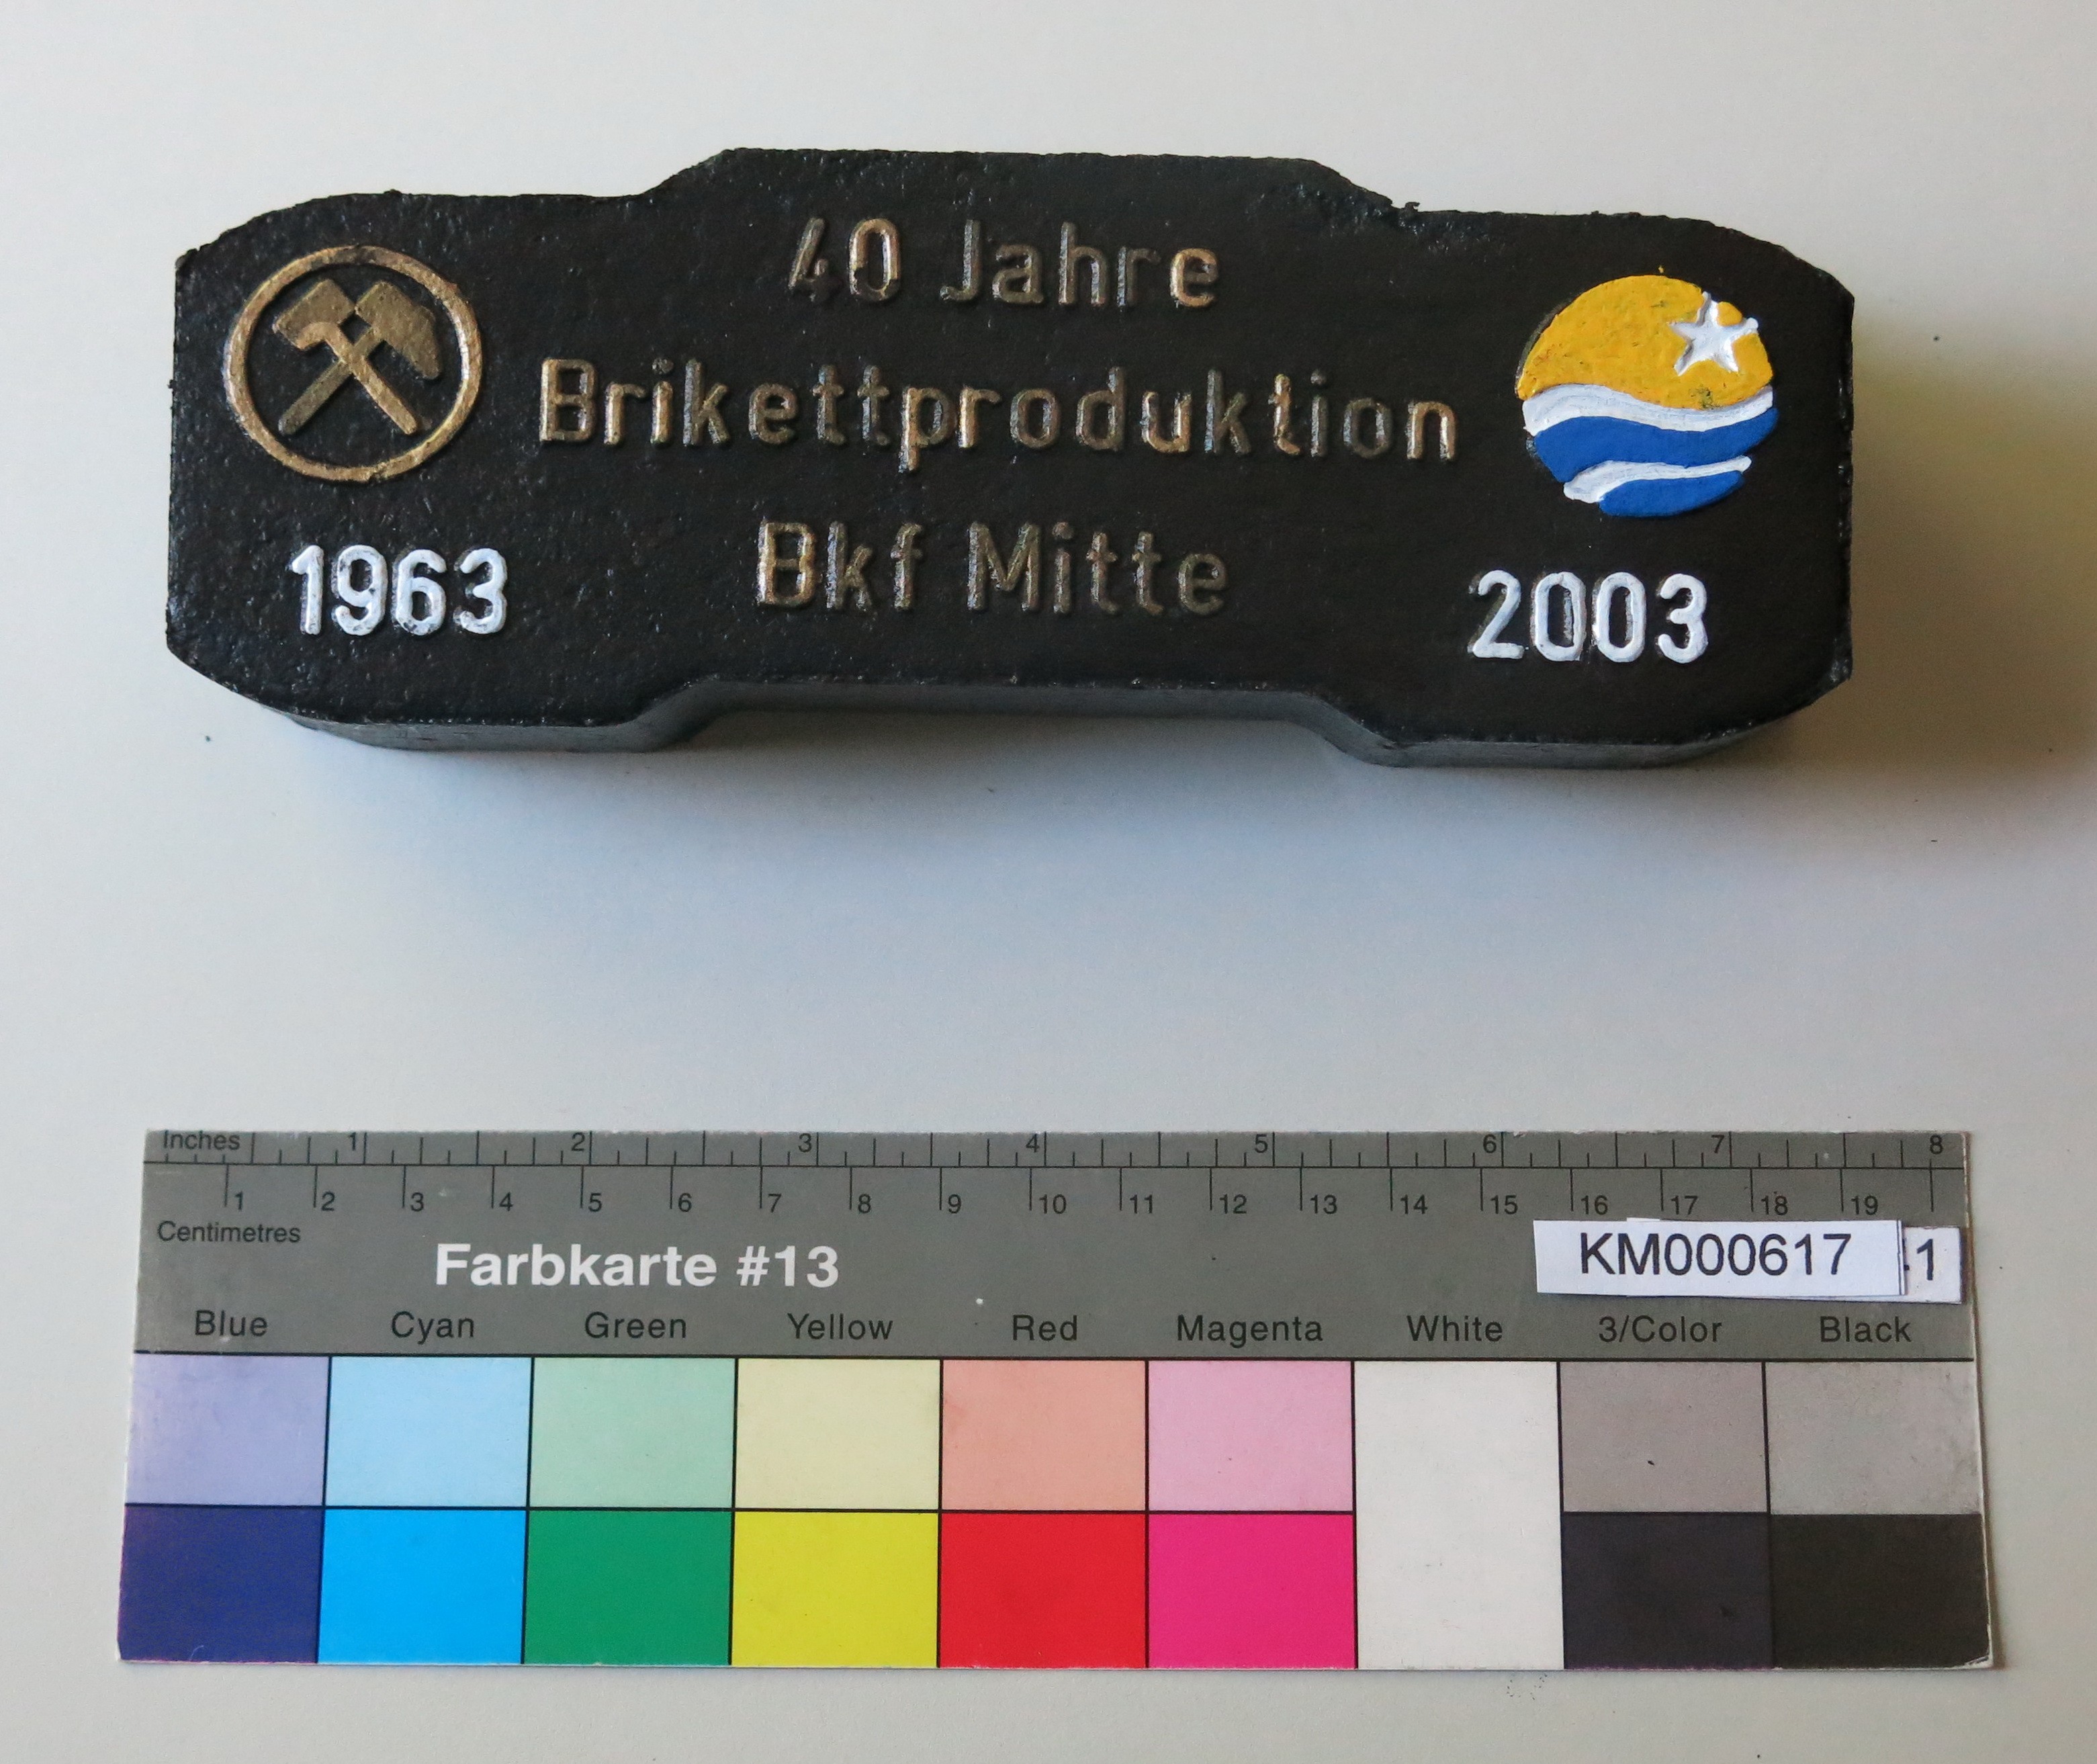 Zierbrikett "40 Jahre Brikettfabrikation Bkf Mitte 1963 2003" (Energiefabrik Knappenrode CC BY-SA)